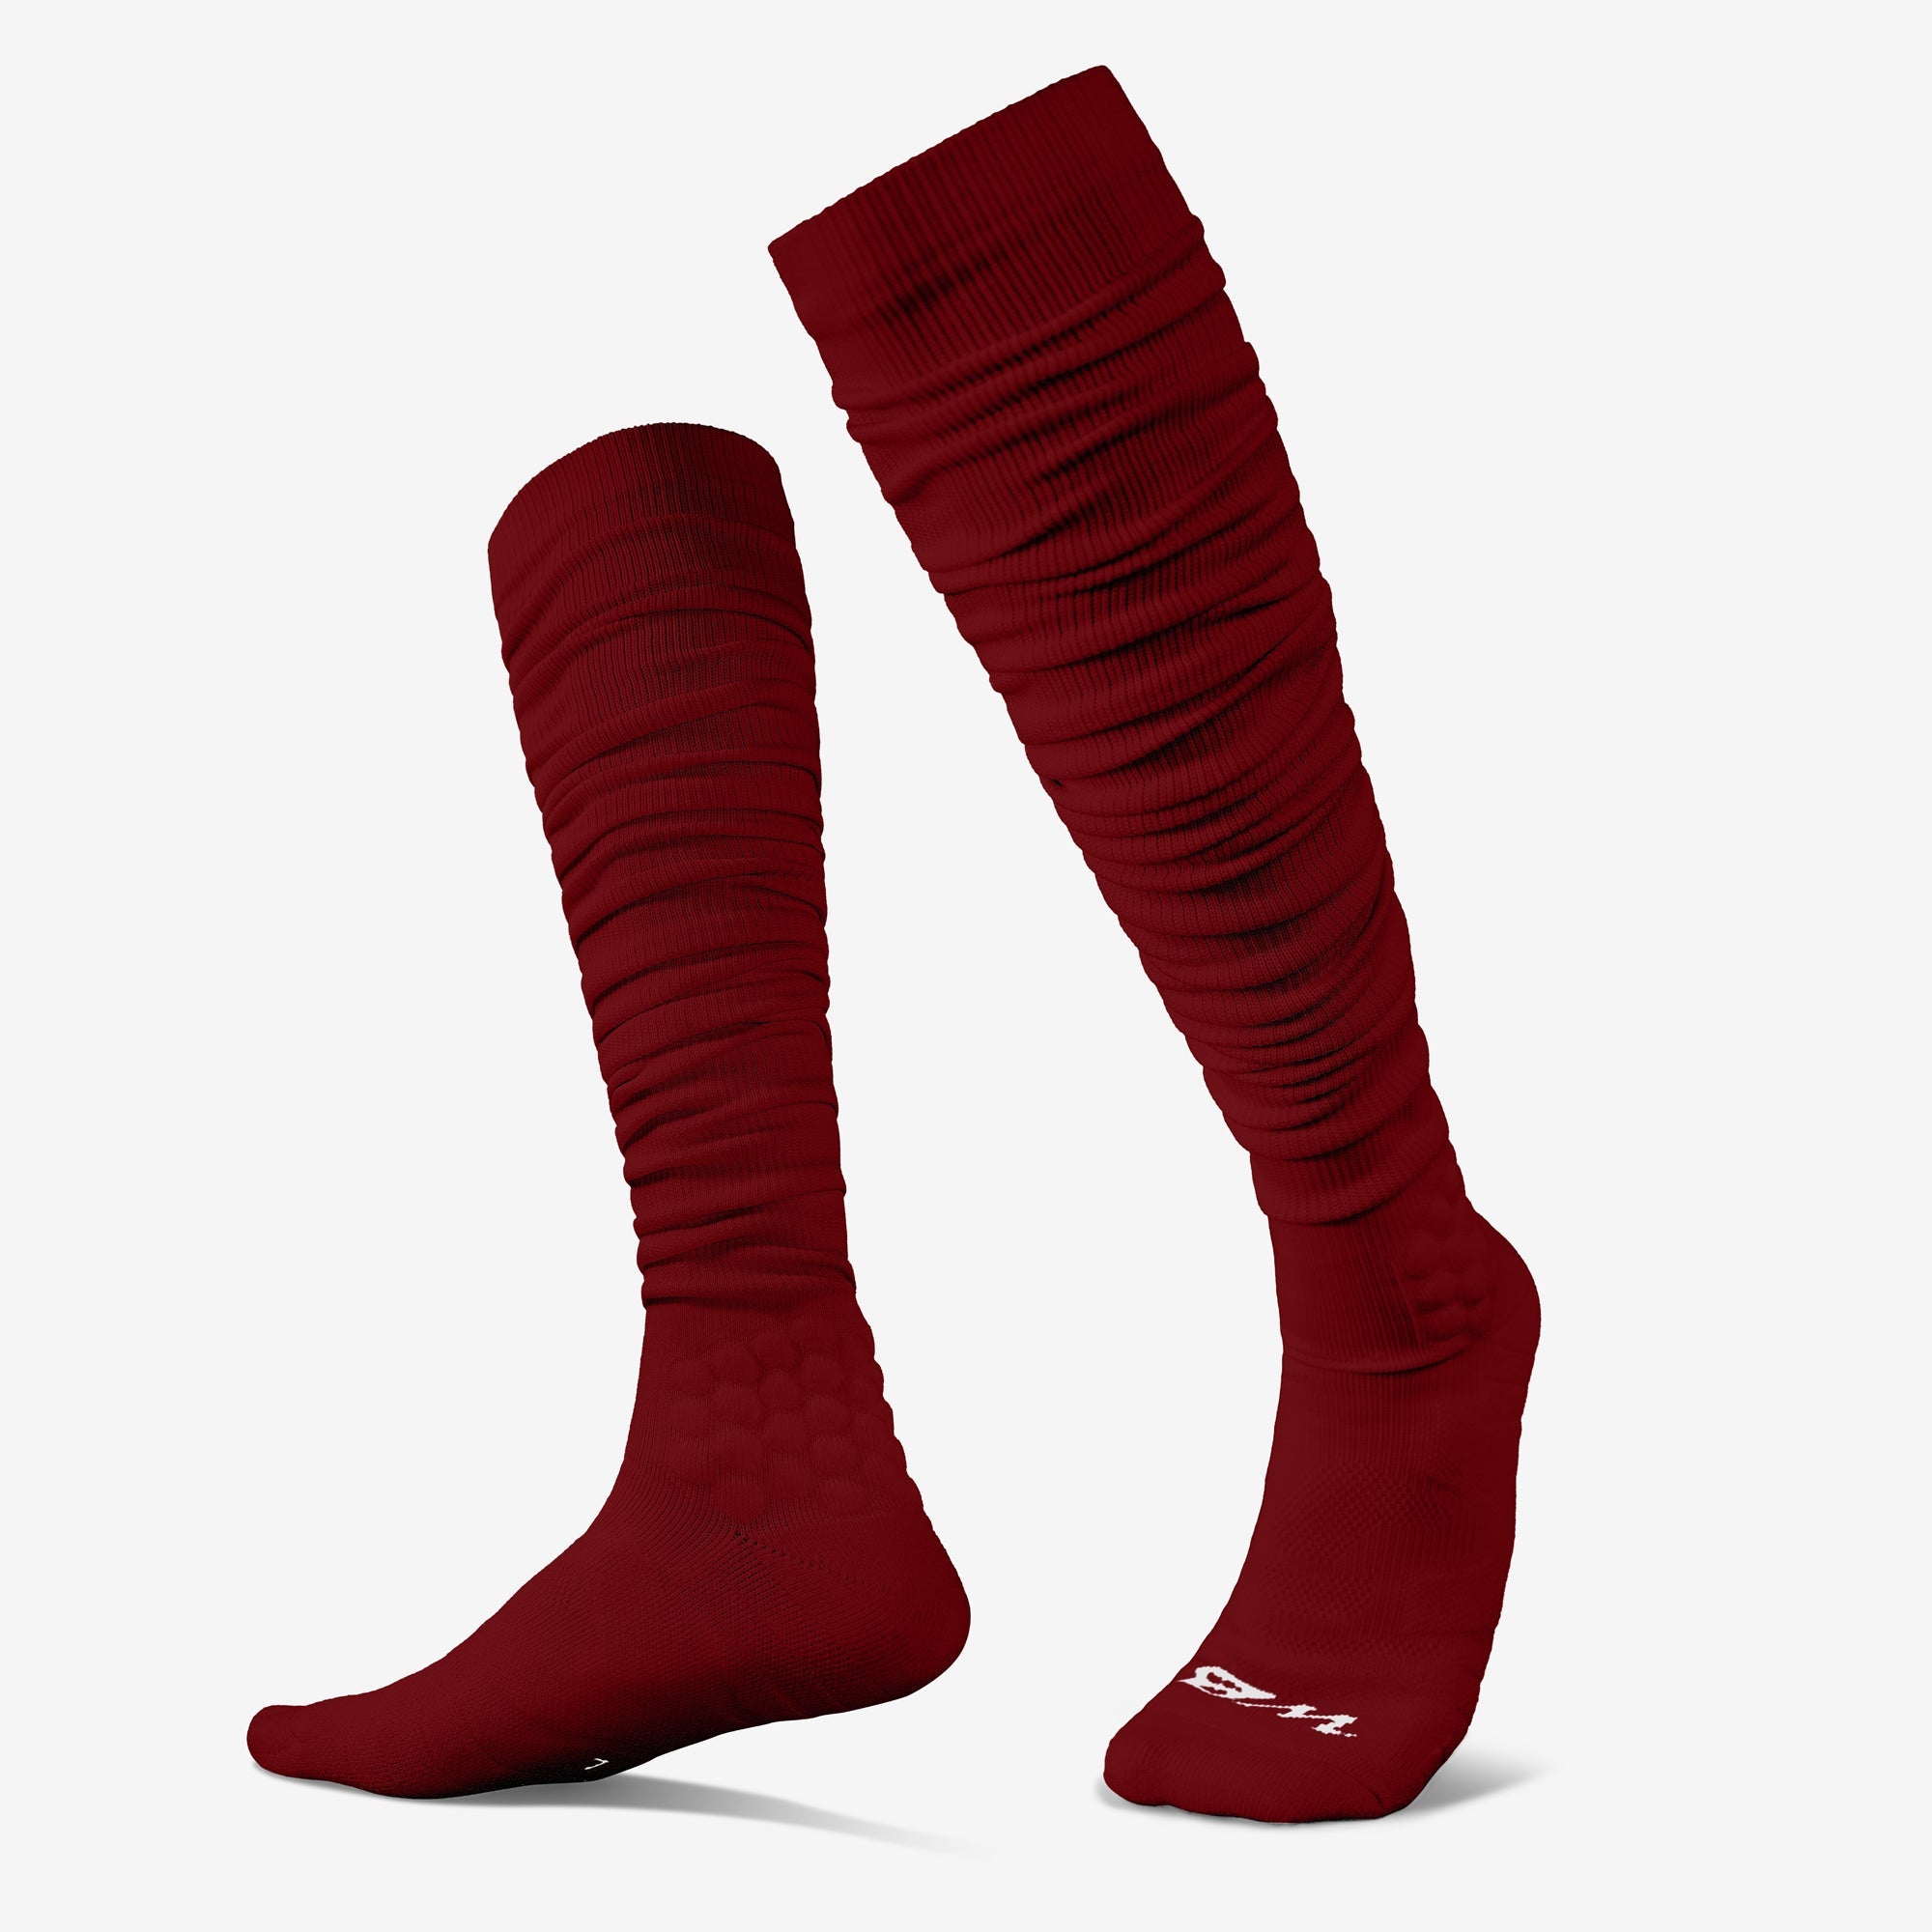 Maroon & White Grip Sports Socks